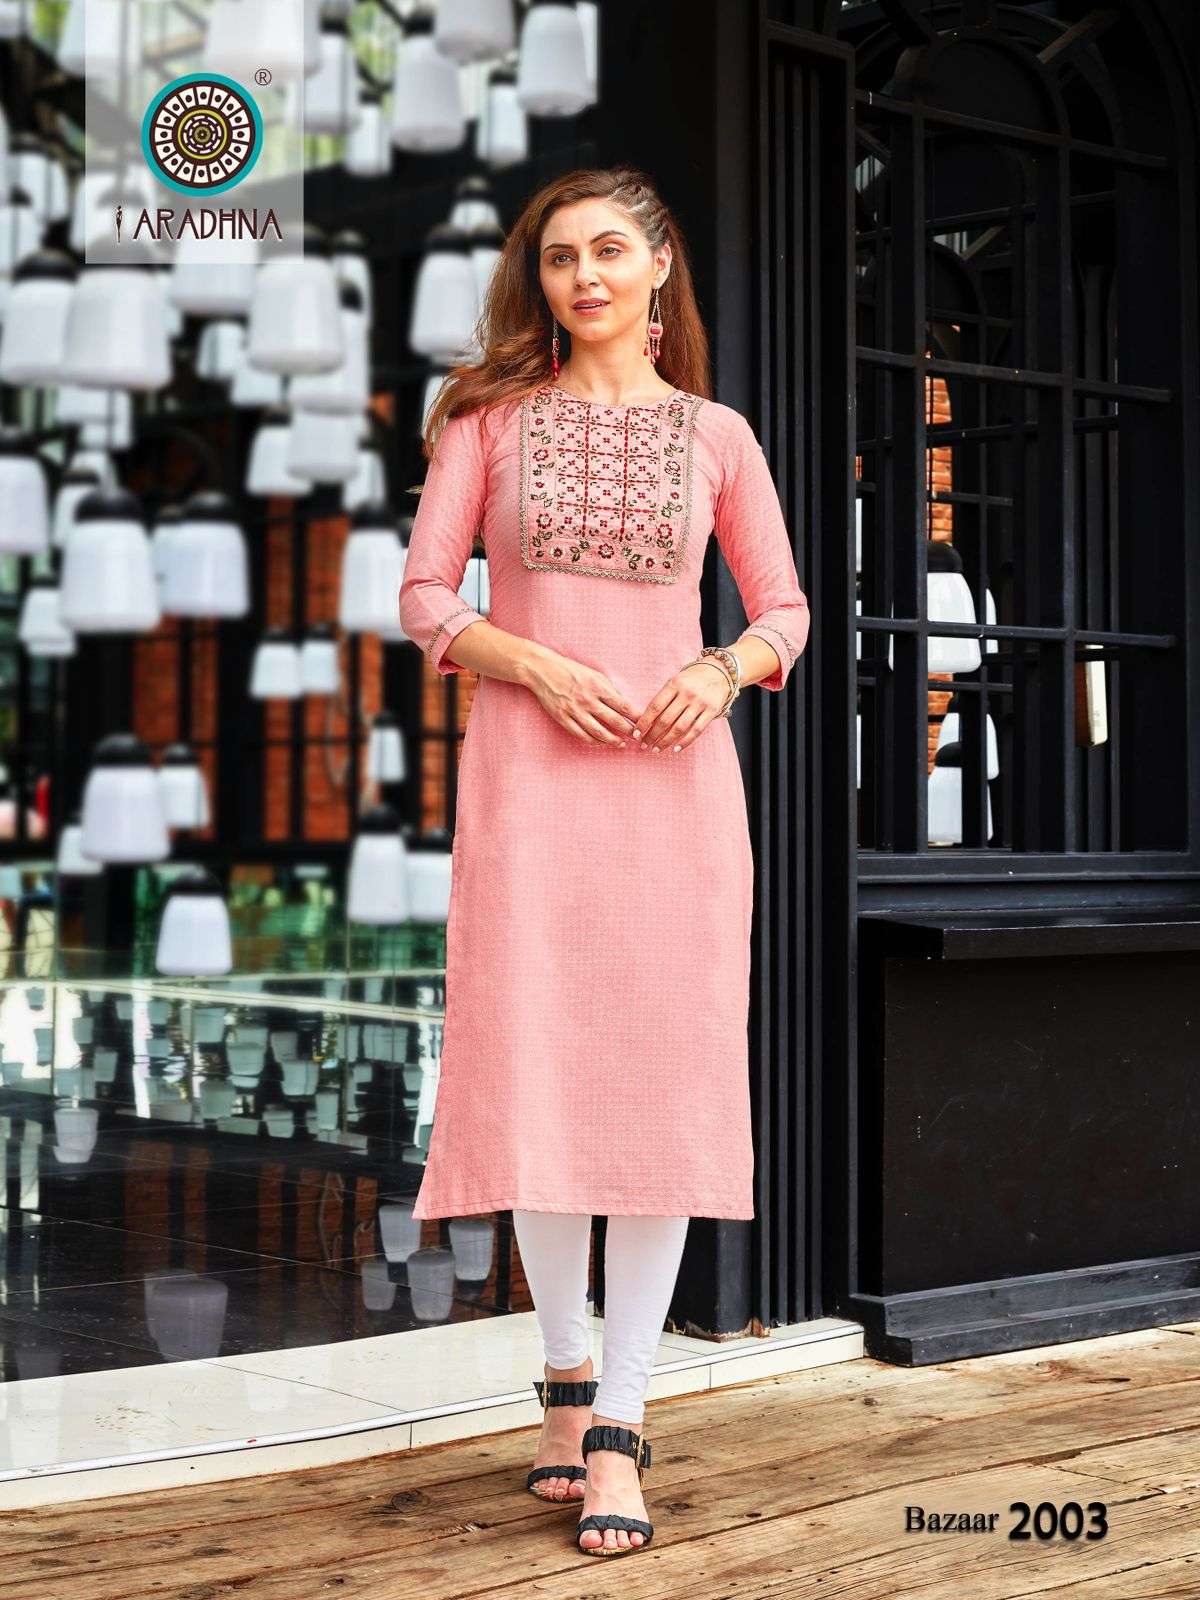 Fashion Bazar Vol 2 By Aradhna Designer Wholesale Online Kratis Set